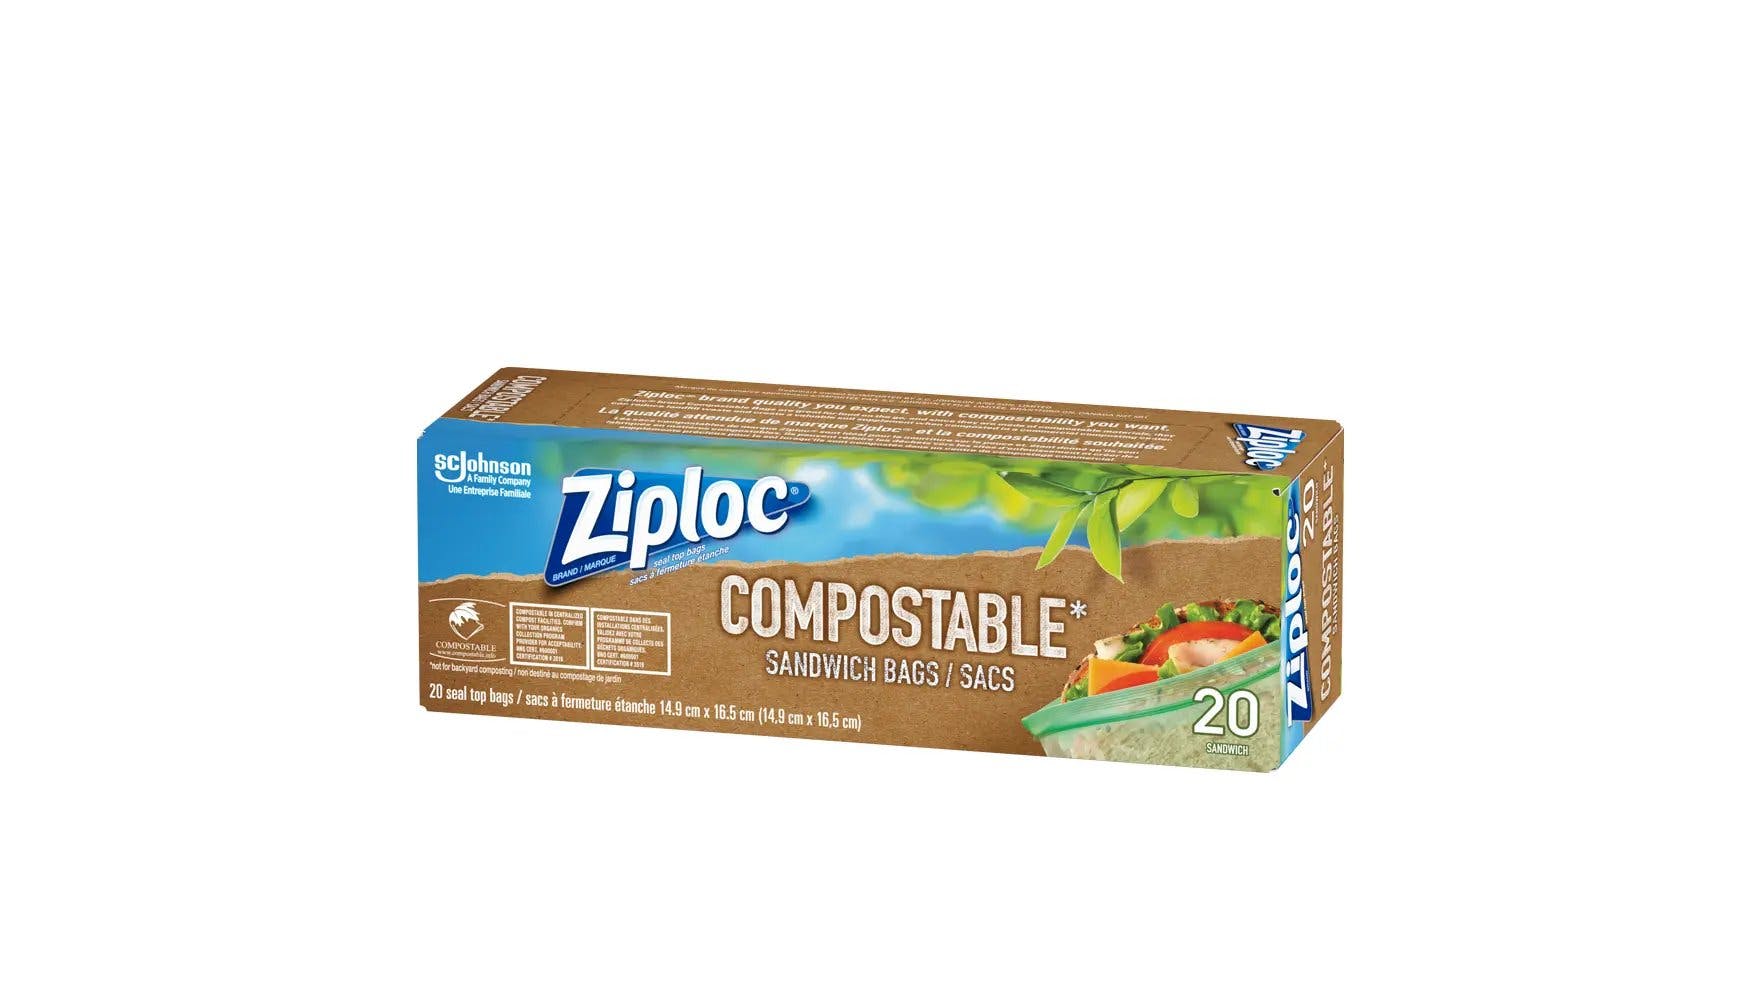 Top of Ziploc compostable sandwich bags box.